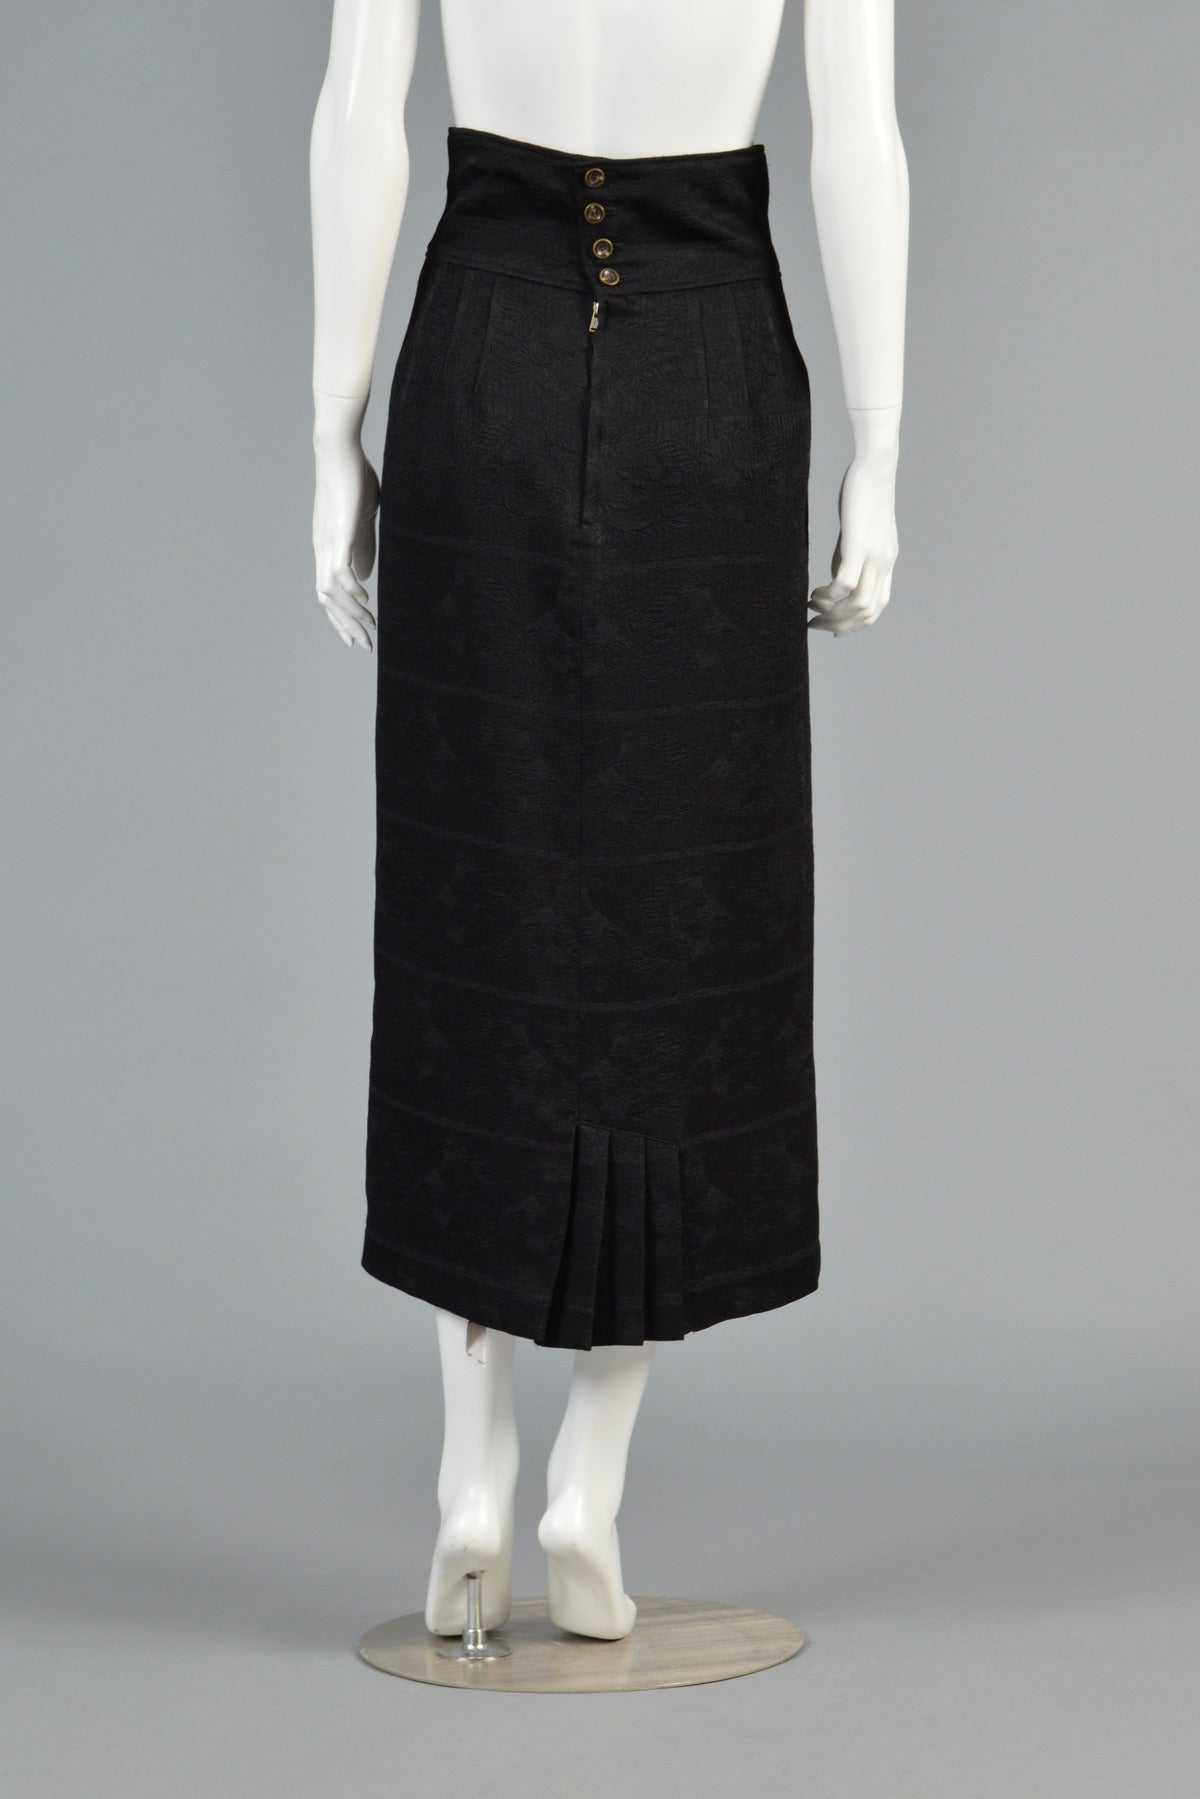 1980s Matsuda Ultra High Waisted Button Back Skirt For Sale 2